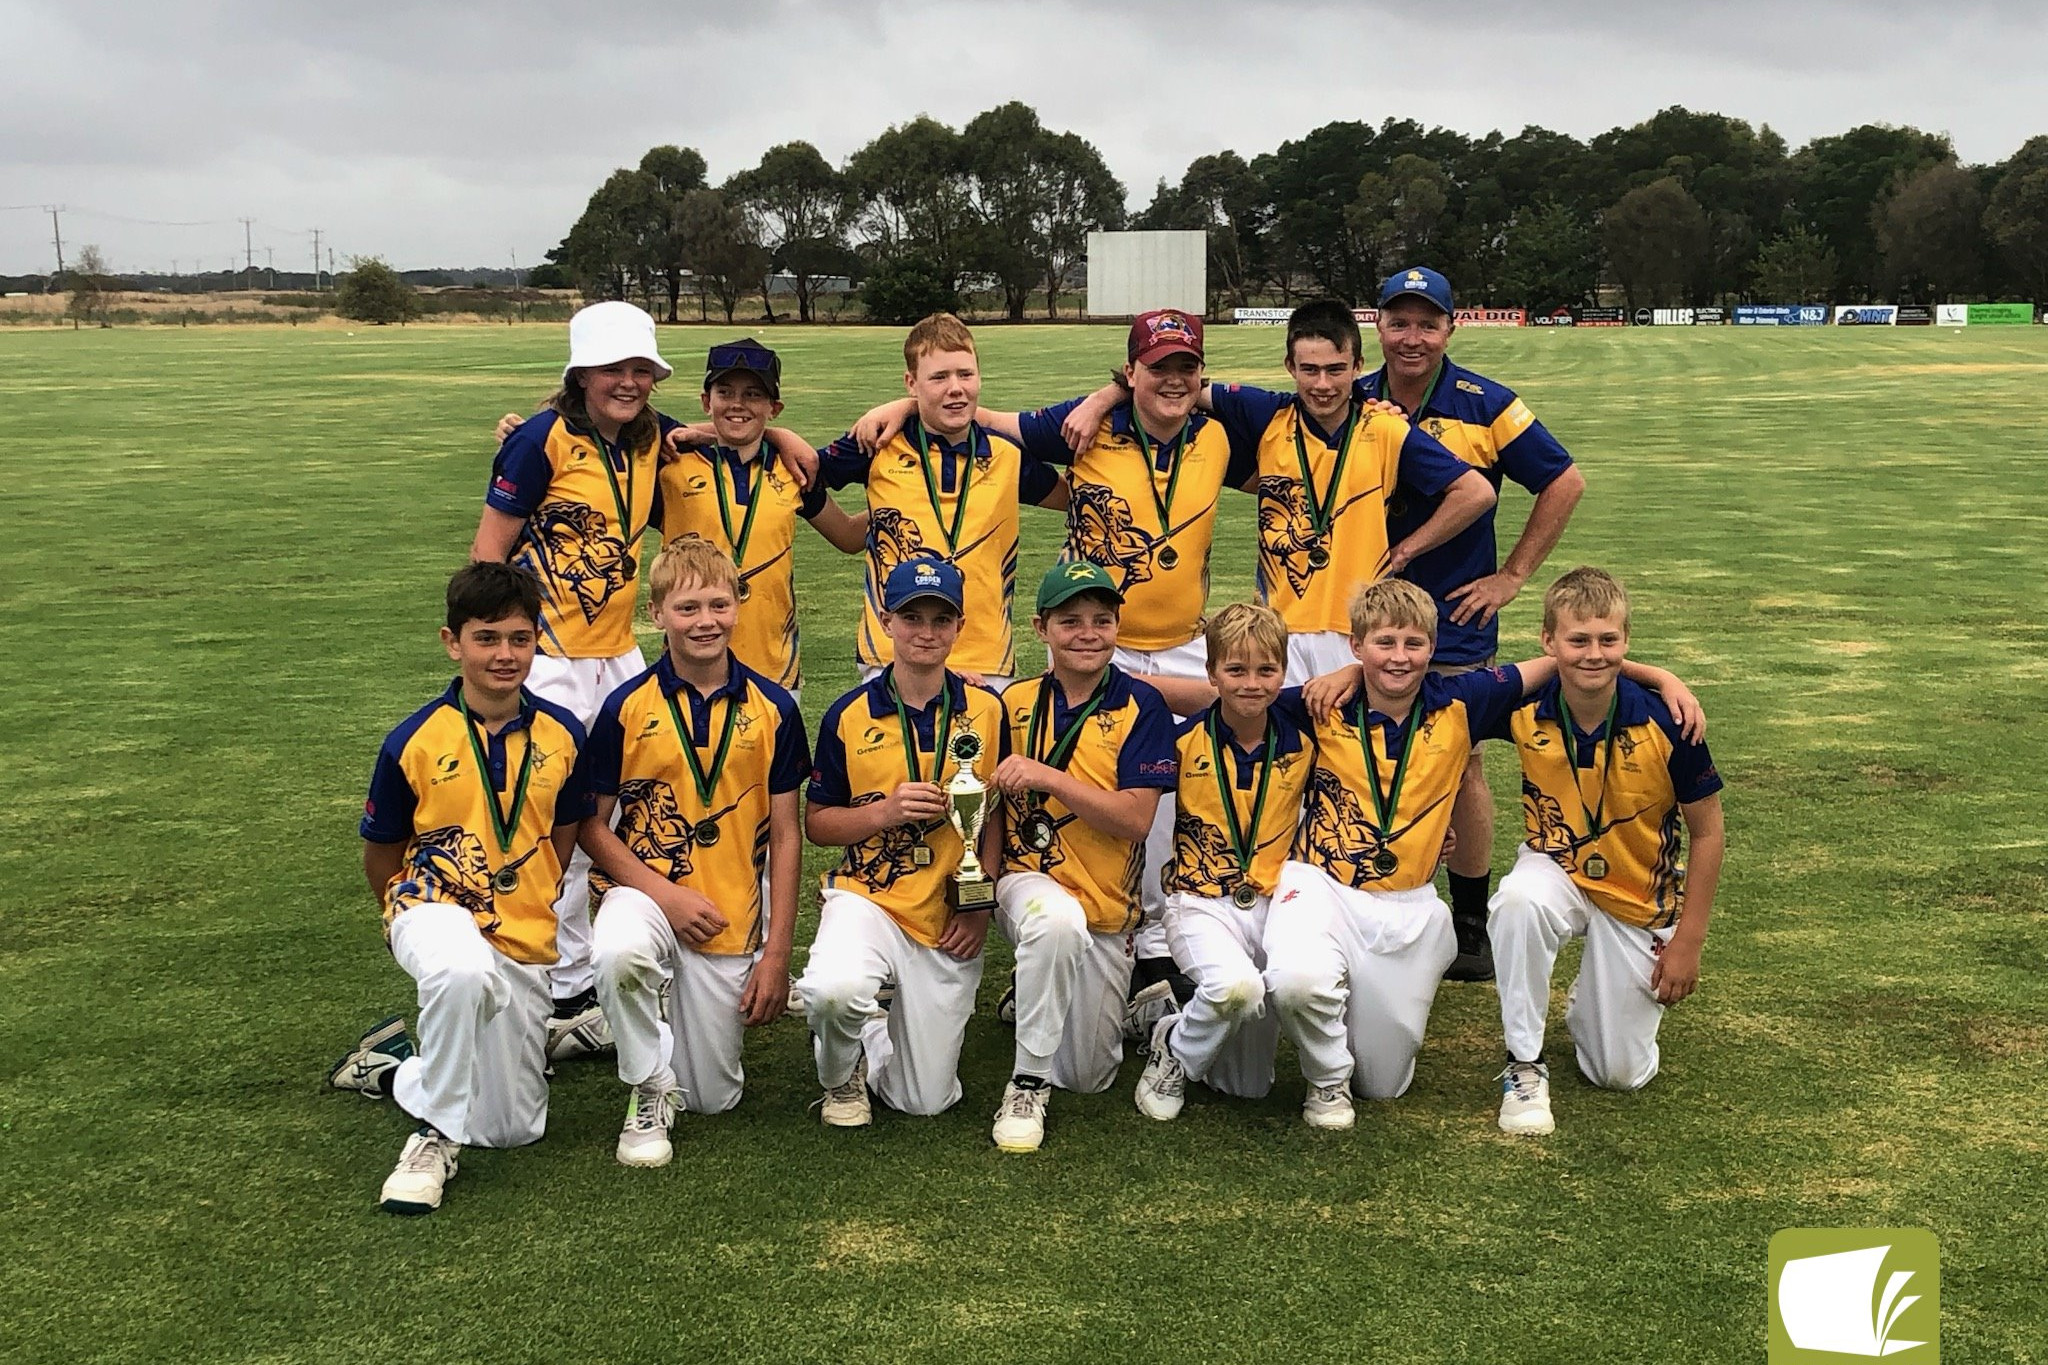 Cobden Cricket Club’s under 13s celebrate victory.